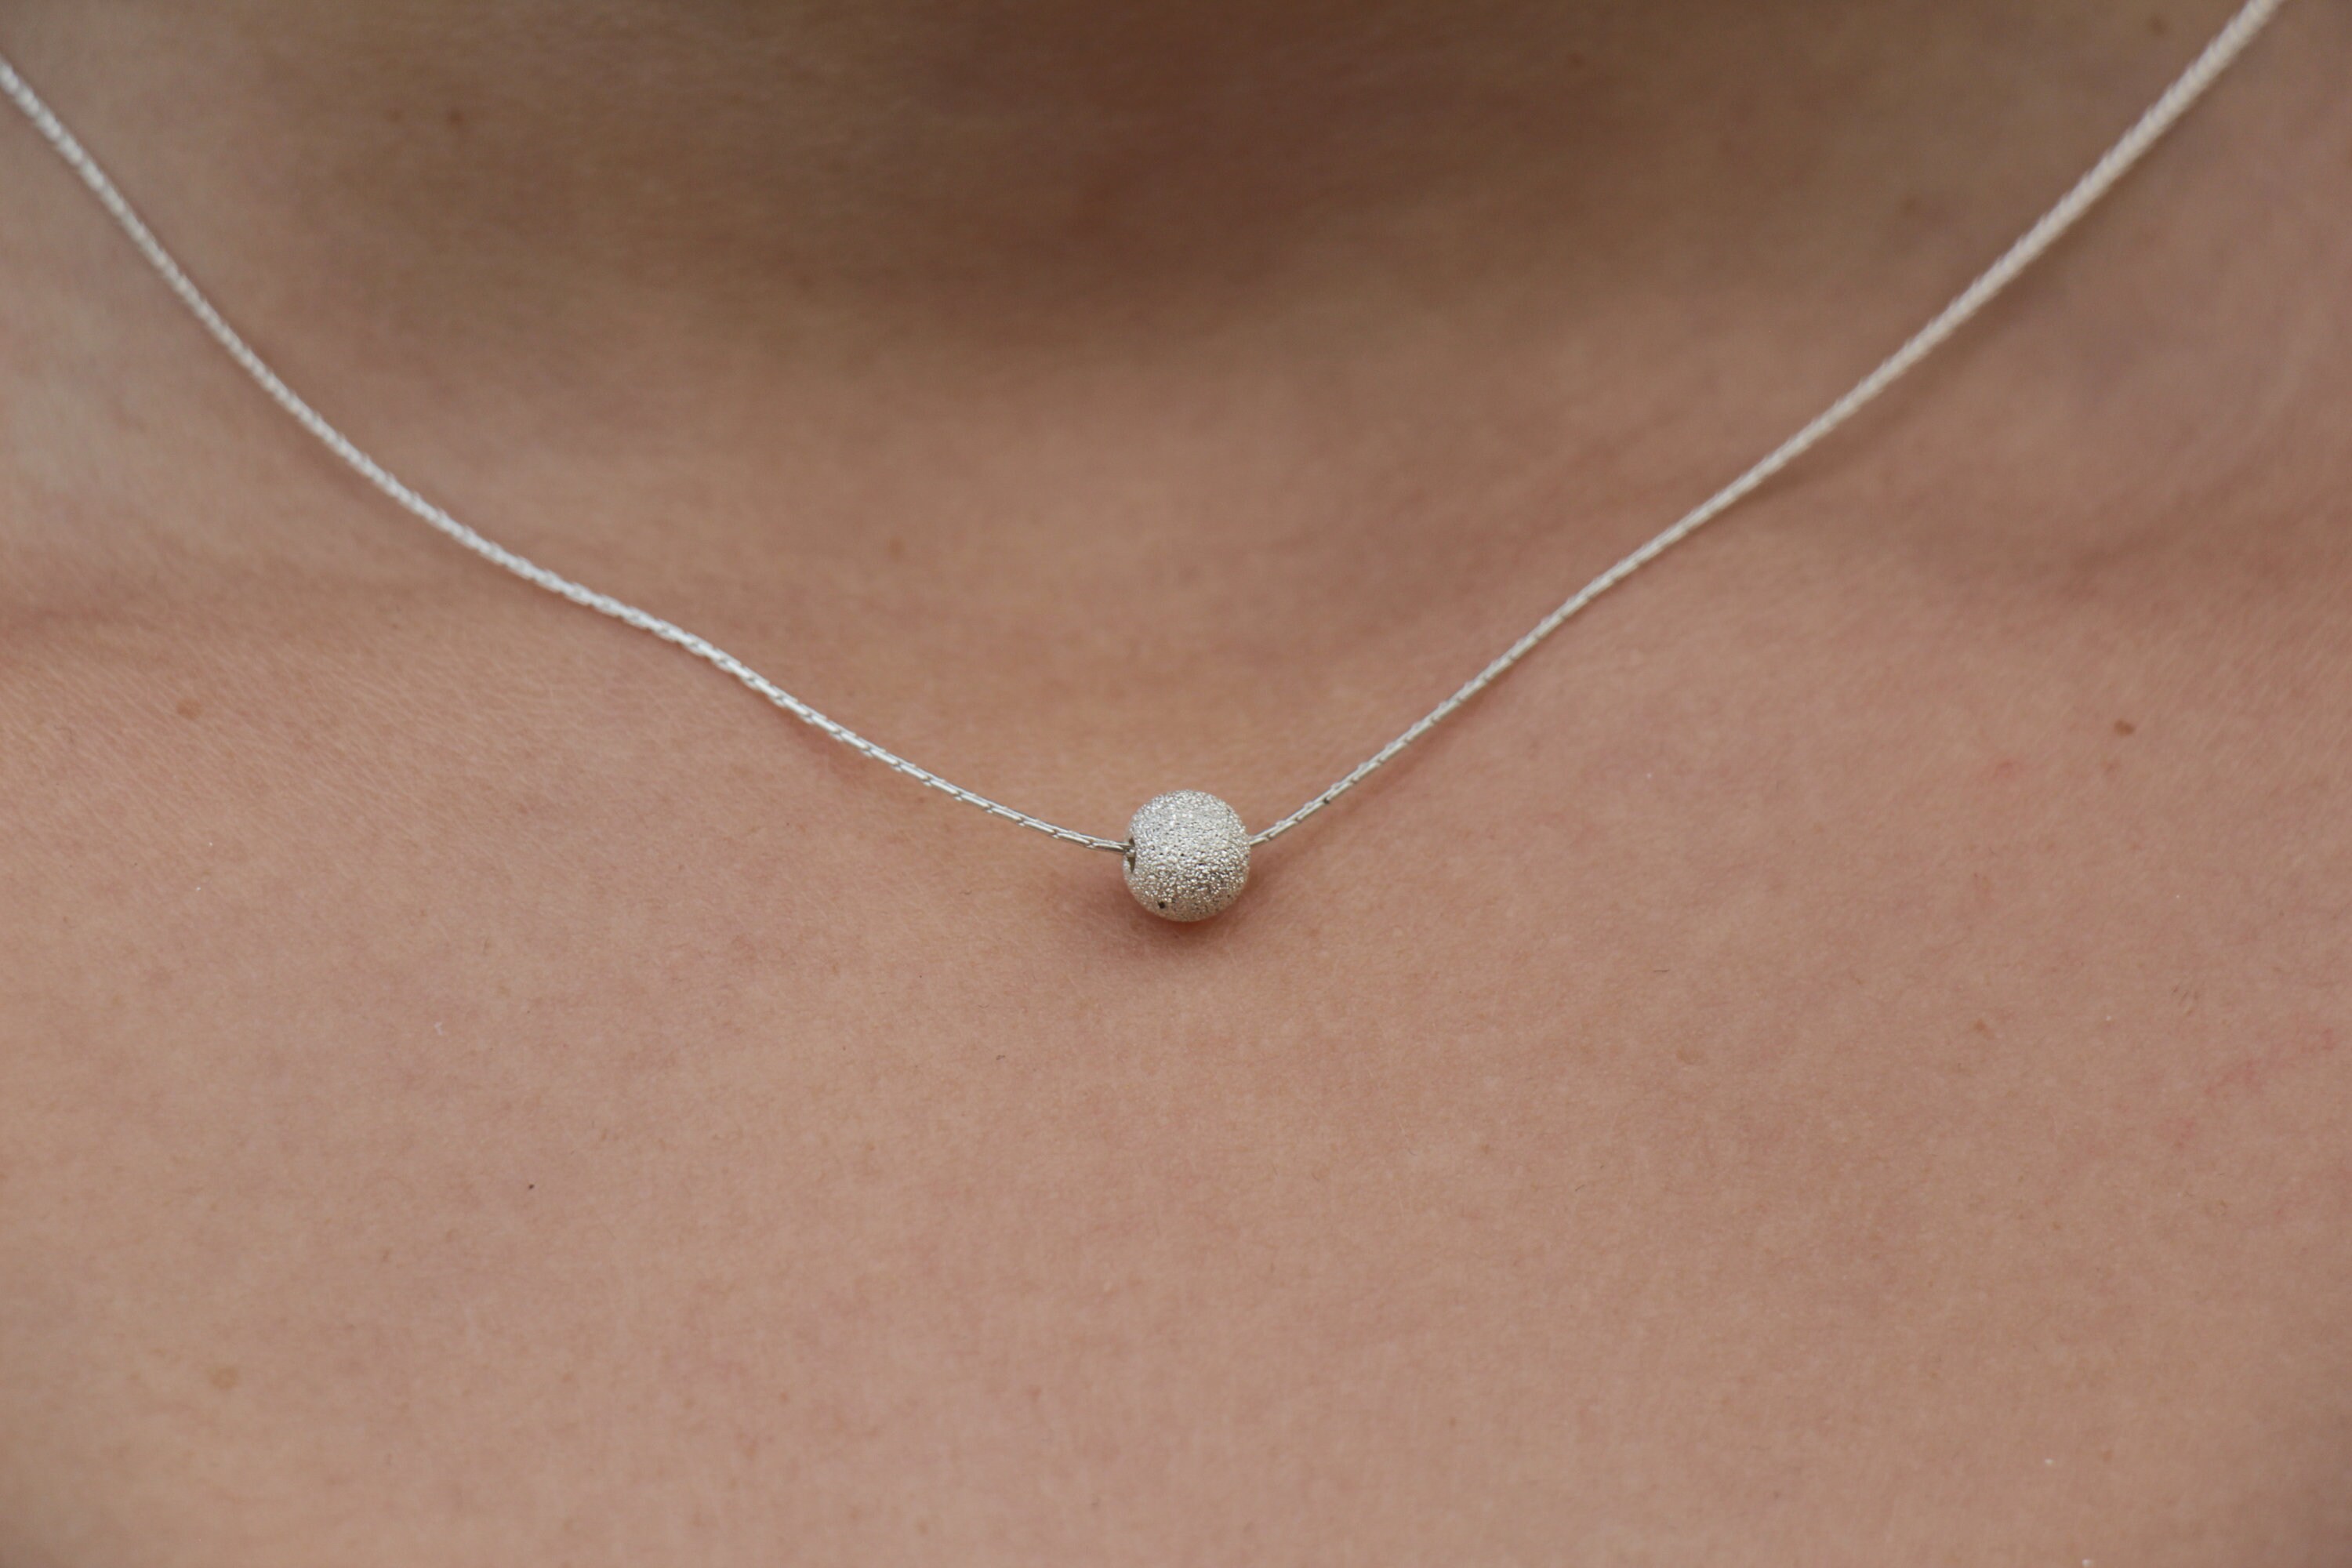 five sixteenths blog: Make It Monday // Simple Single Bead Pendant Necklace